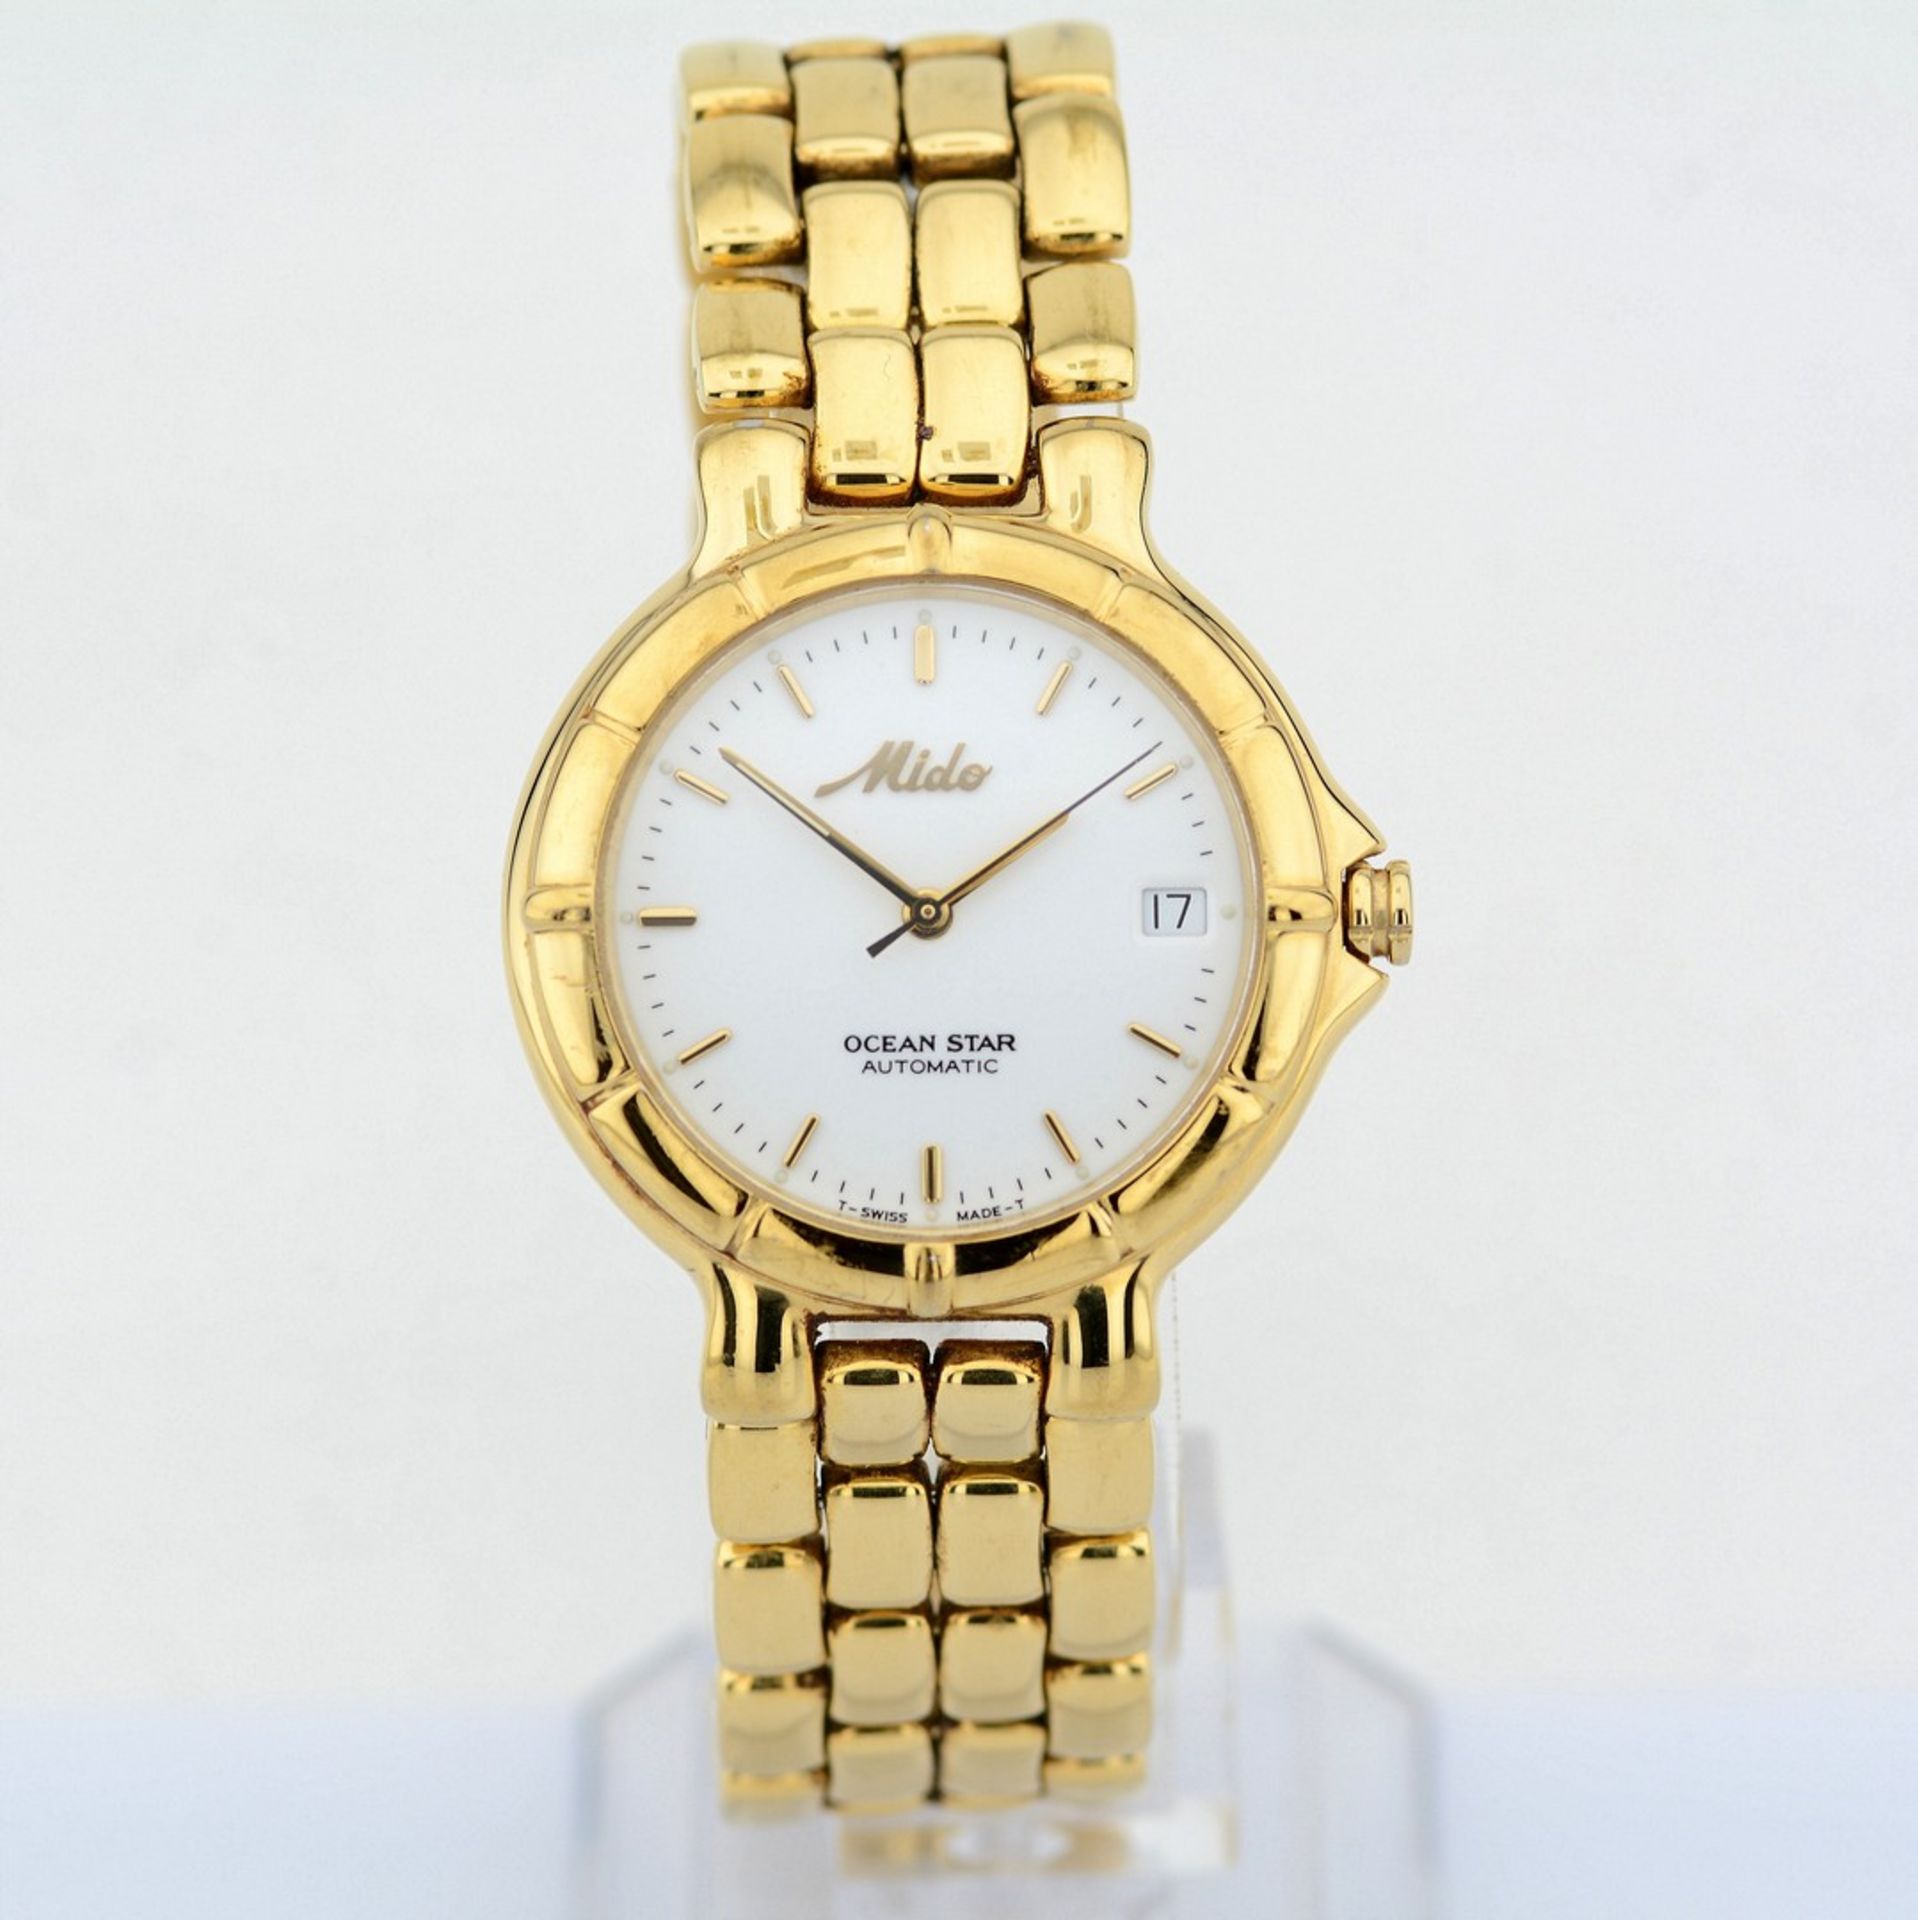 Mido / Ocean Star Automatic Date - Gentlmen's Gold-plated Wrist Watch - Image 3 of 6